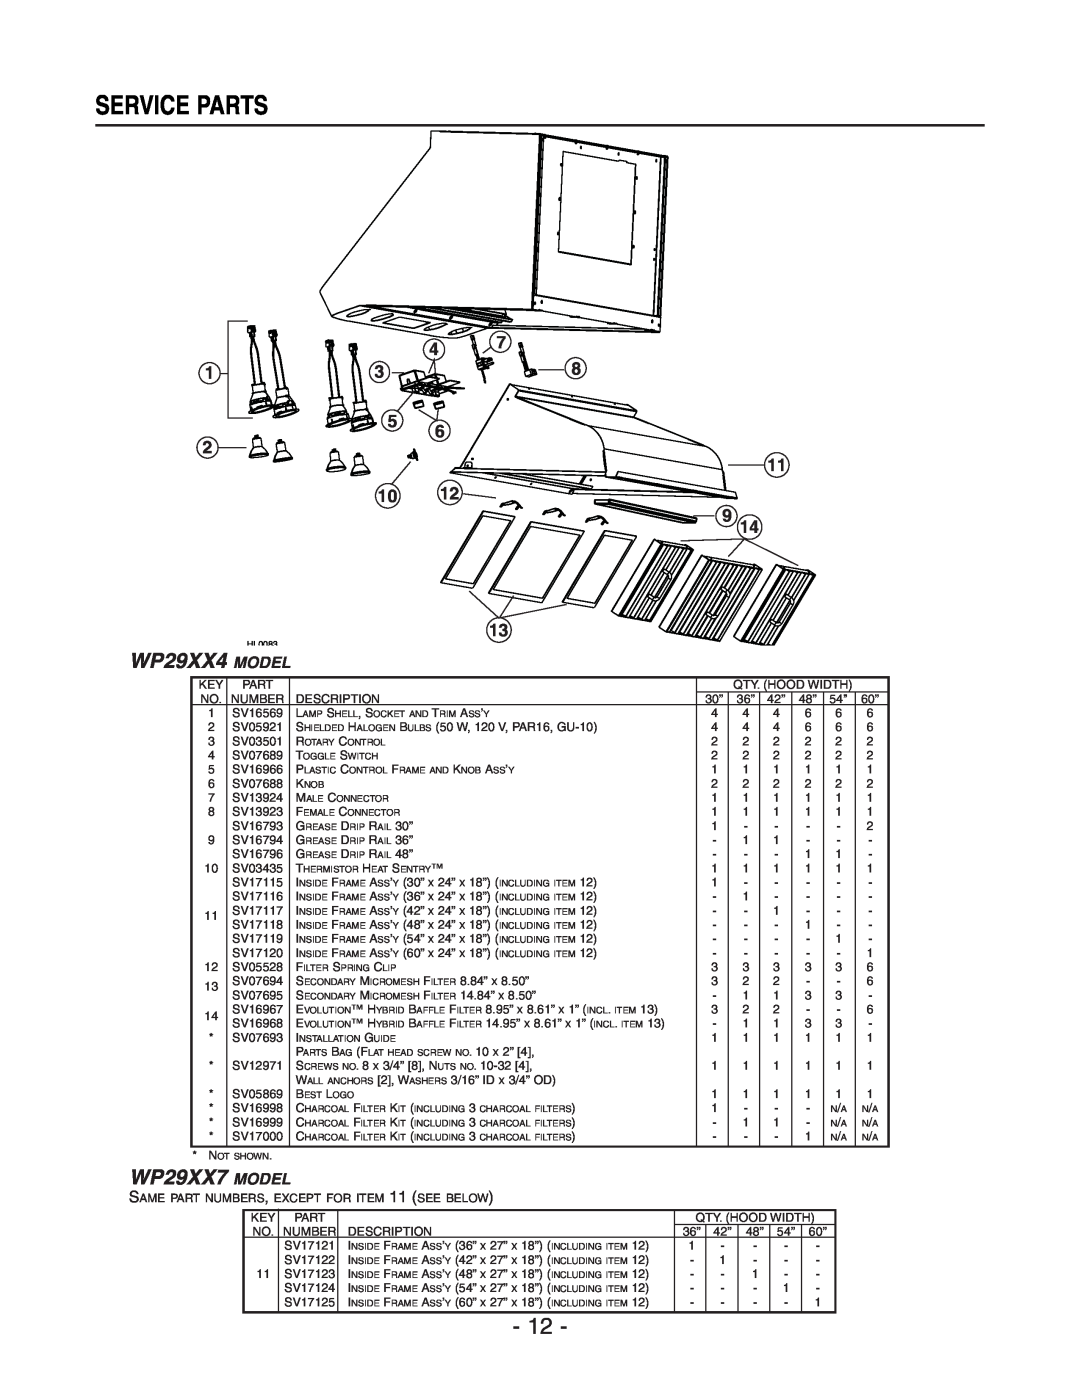 Rangemaster WP29M installation instructions Service Parts, WP29XX4 MODEL, WP29XX7 MODEL 